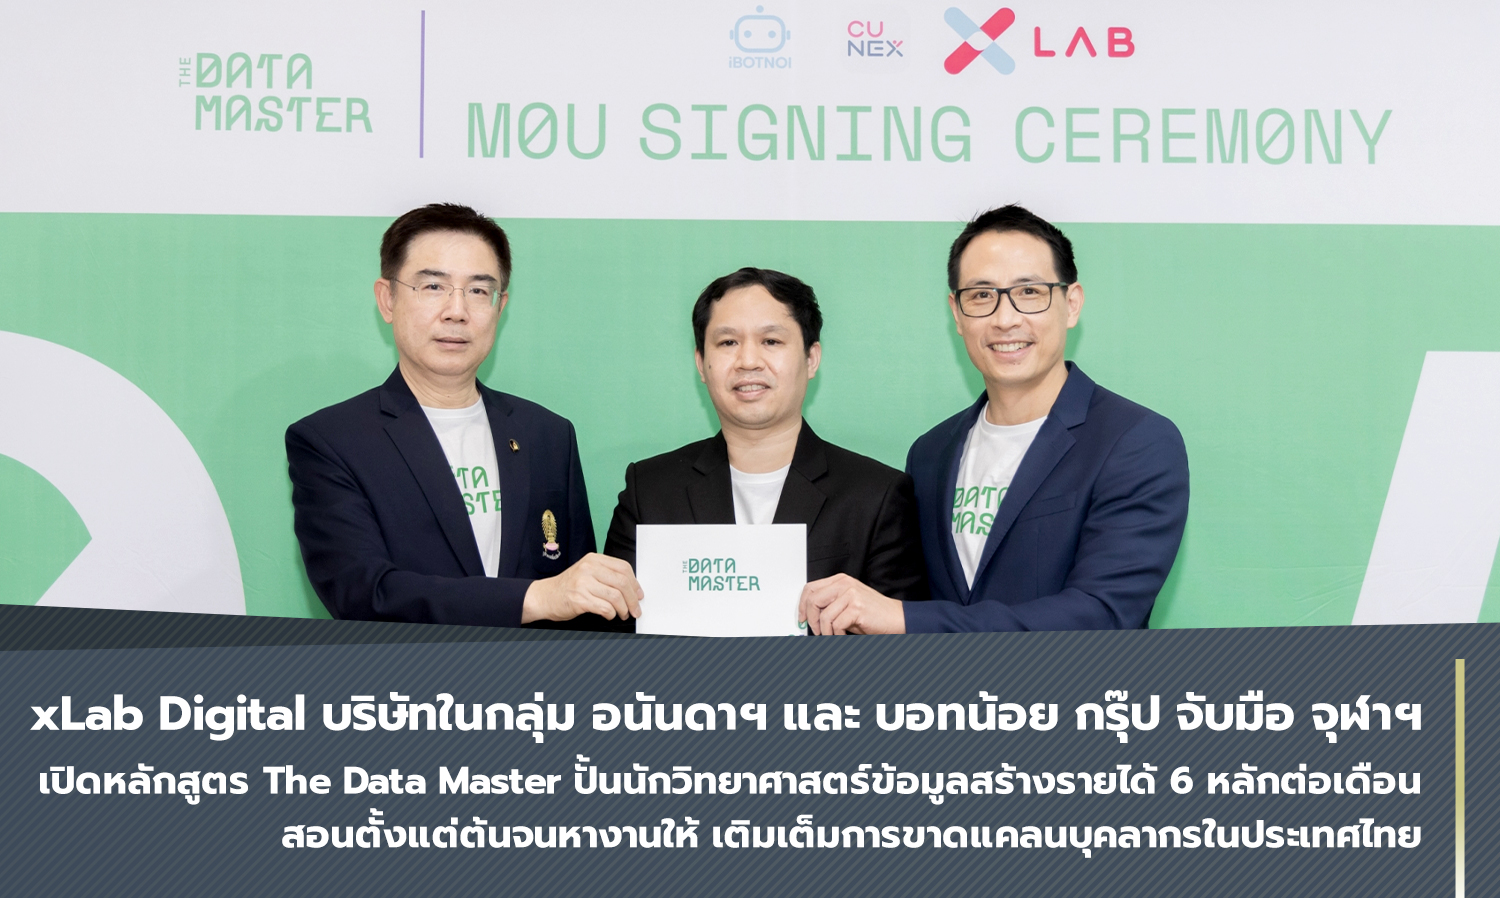 xLab Digital บริษัทในกลุ่ม อนันดาฯ และ บอทน้อย กรุ๊ป จับมือ จุฬาฯ เปิดหลักสูตร The Data Master ปั้นนักวิทยาศาสตร์ข้อมูลสร้างรายได้ 6 หลักต่อเดือน สอนตั้งแต่ต้นจนหางานให้ เติมเต็มการขาดแคลนบุคลากรในประเทศไทย